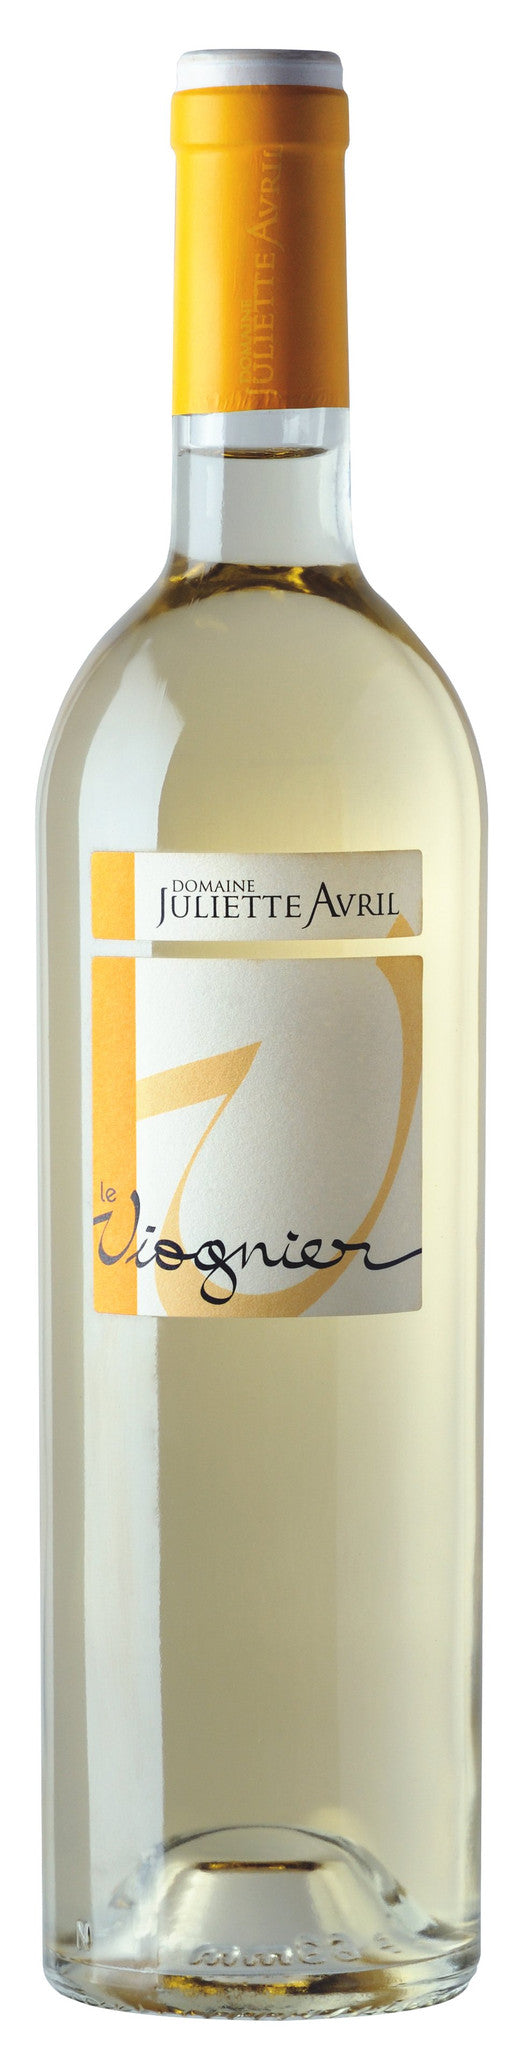 Domaine Juliette Avril, Viognier, 2014